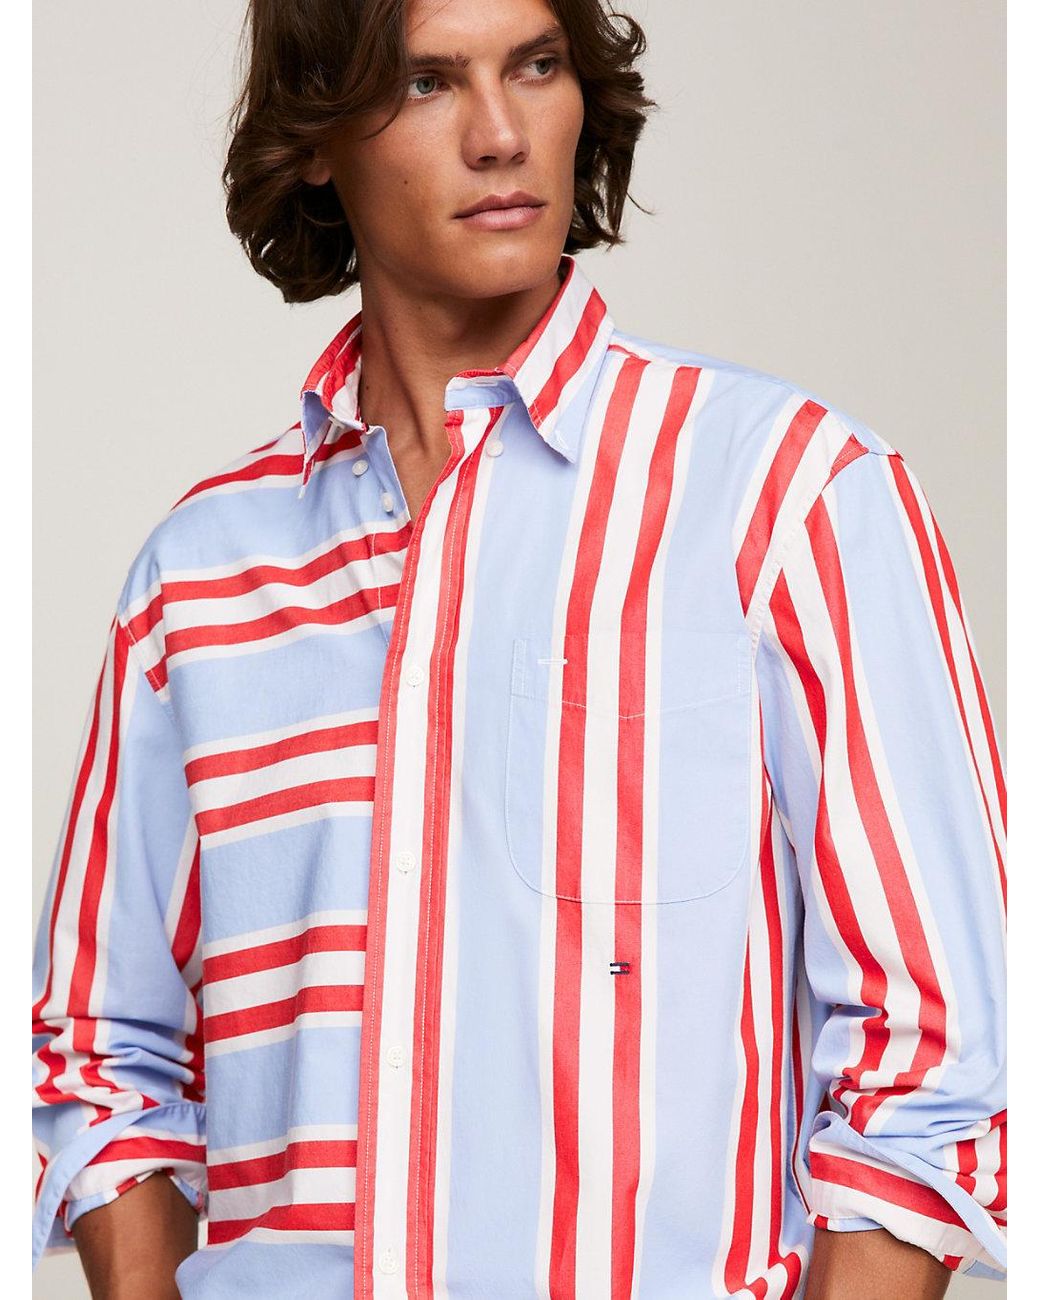 Lyst Mixed Stripe UK in Fit Tommy Hilfiger for Blue Shirt Regular | Men